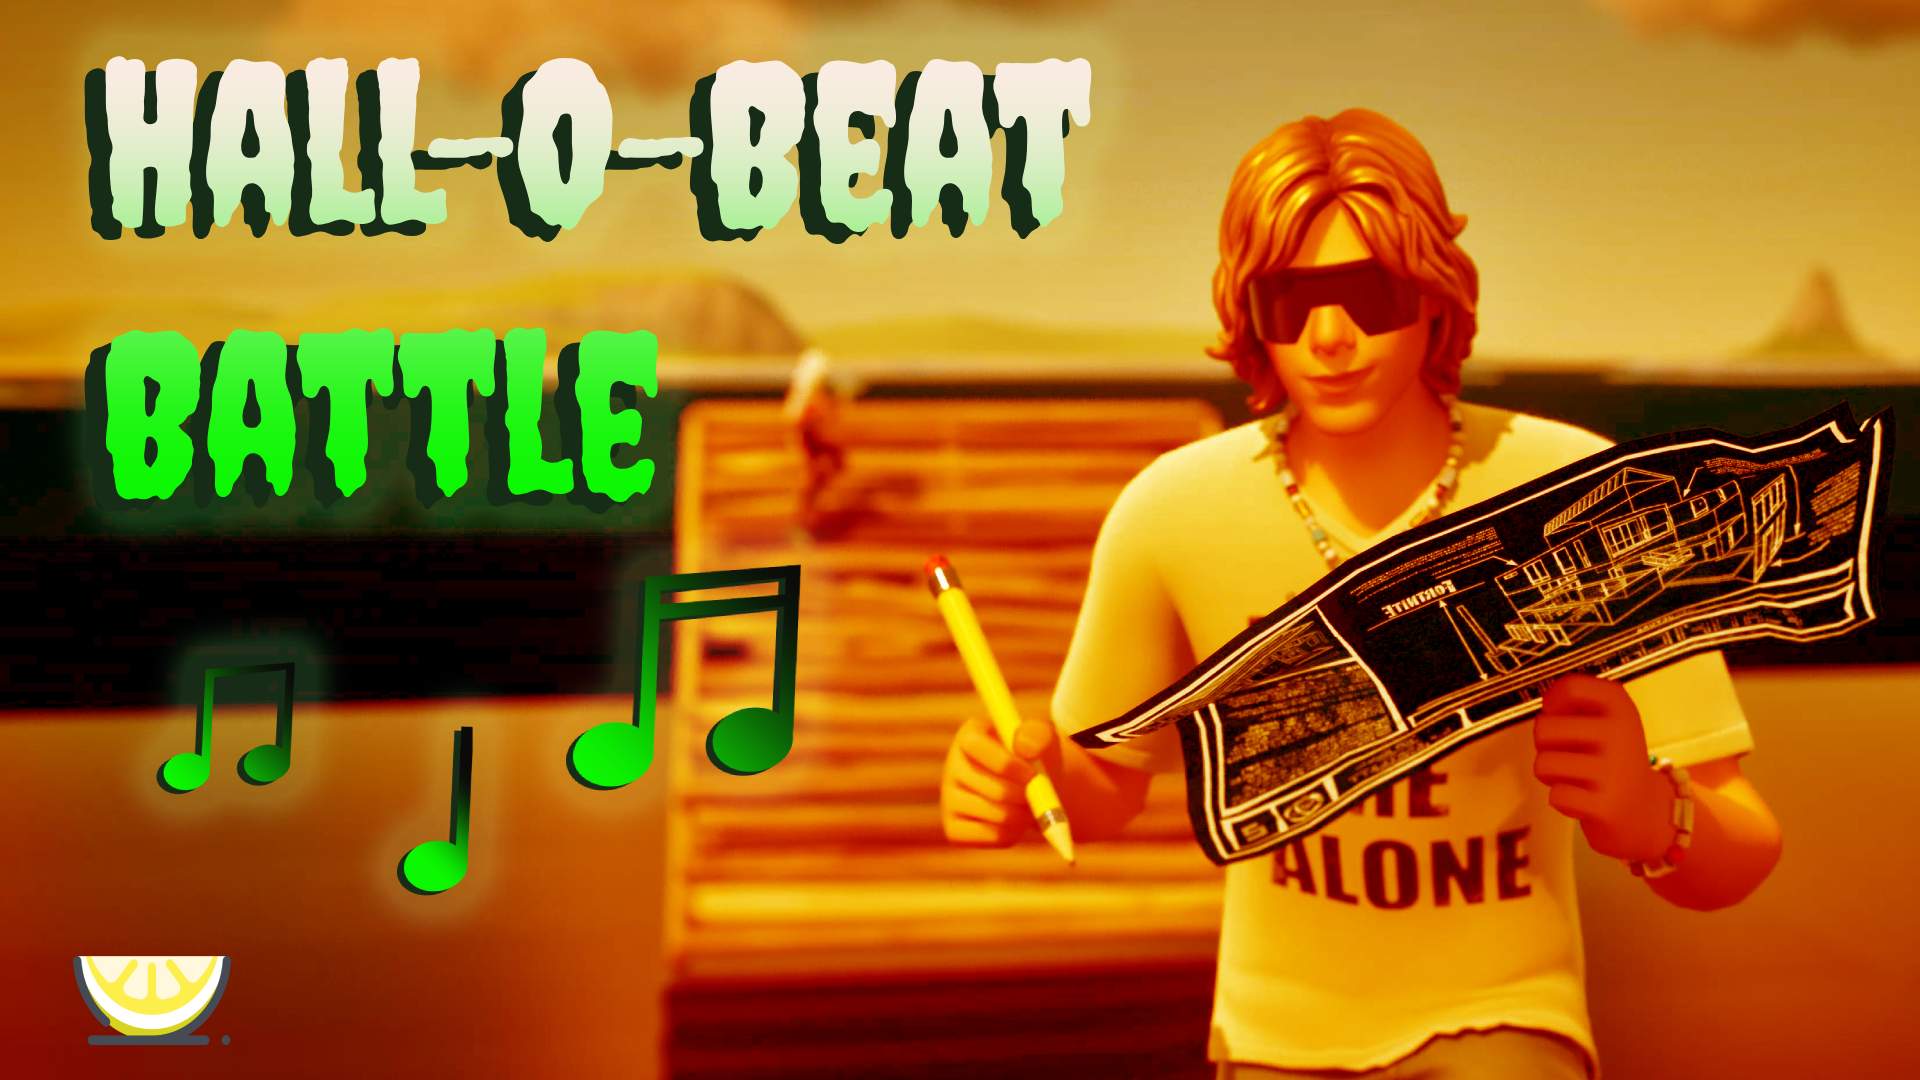 🎃Hall-o-beat Battle 1v1